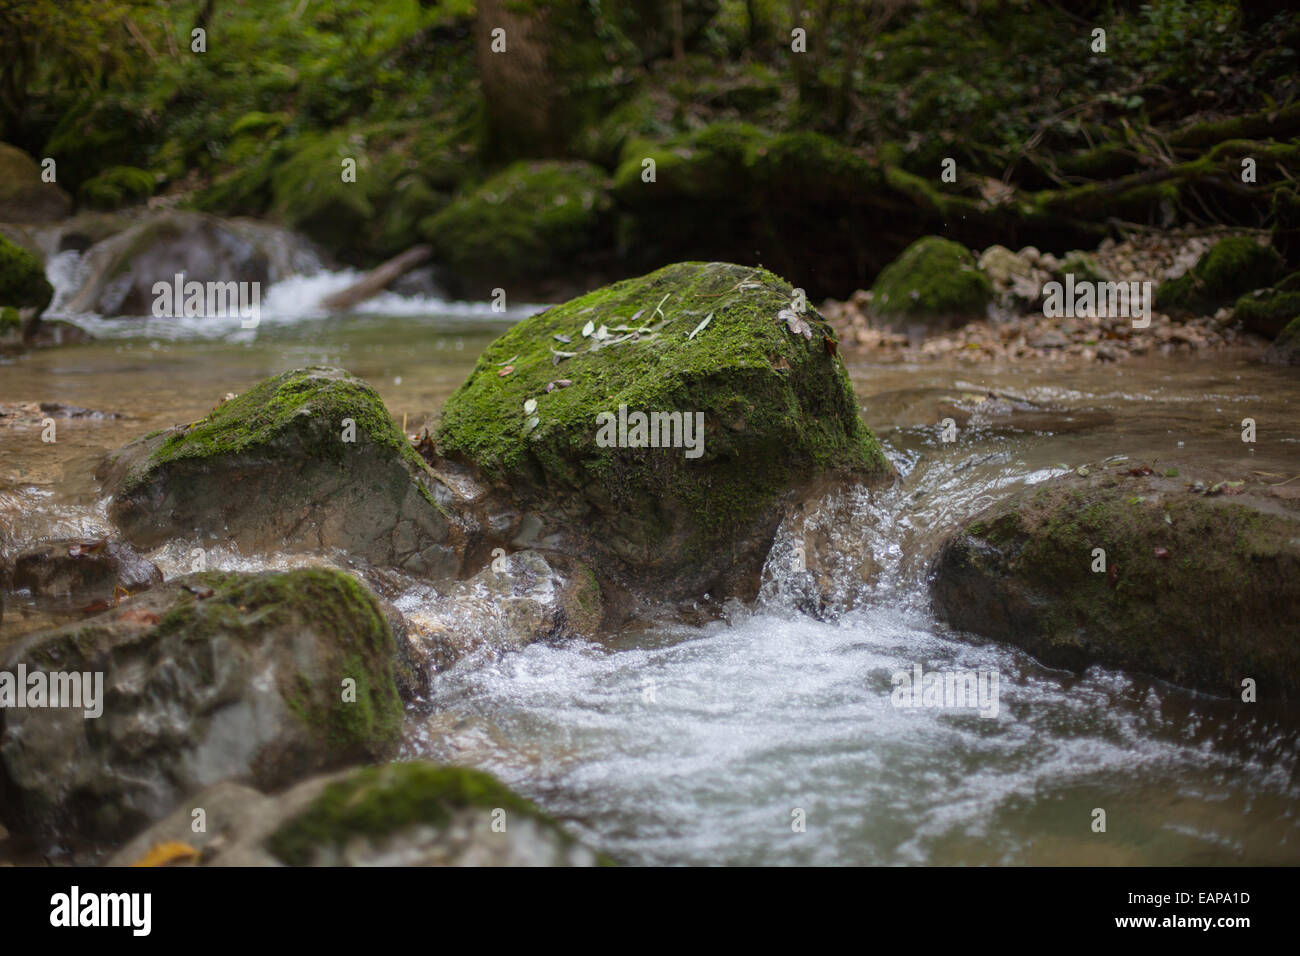 Moss overgrown stone in the stream Stock Photo